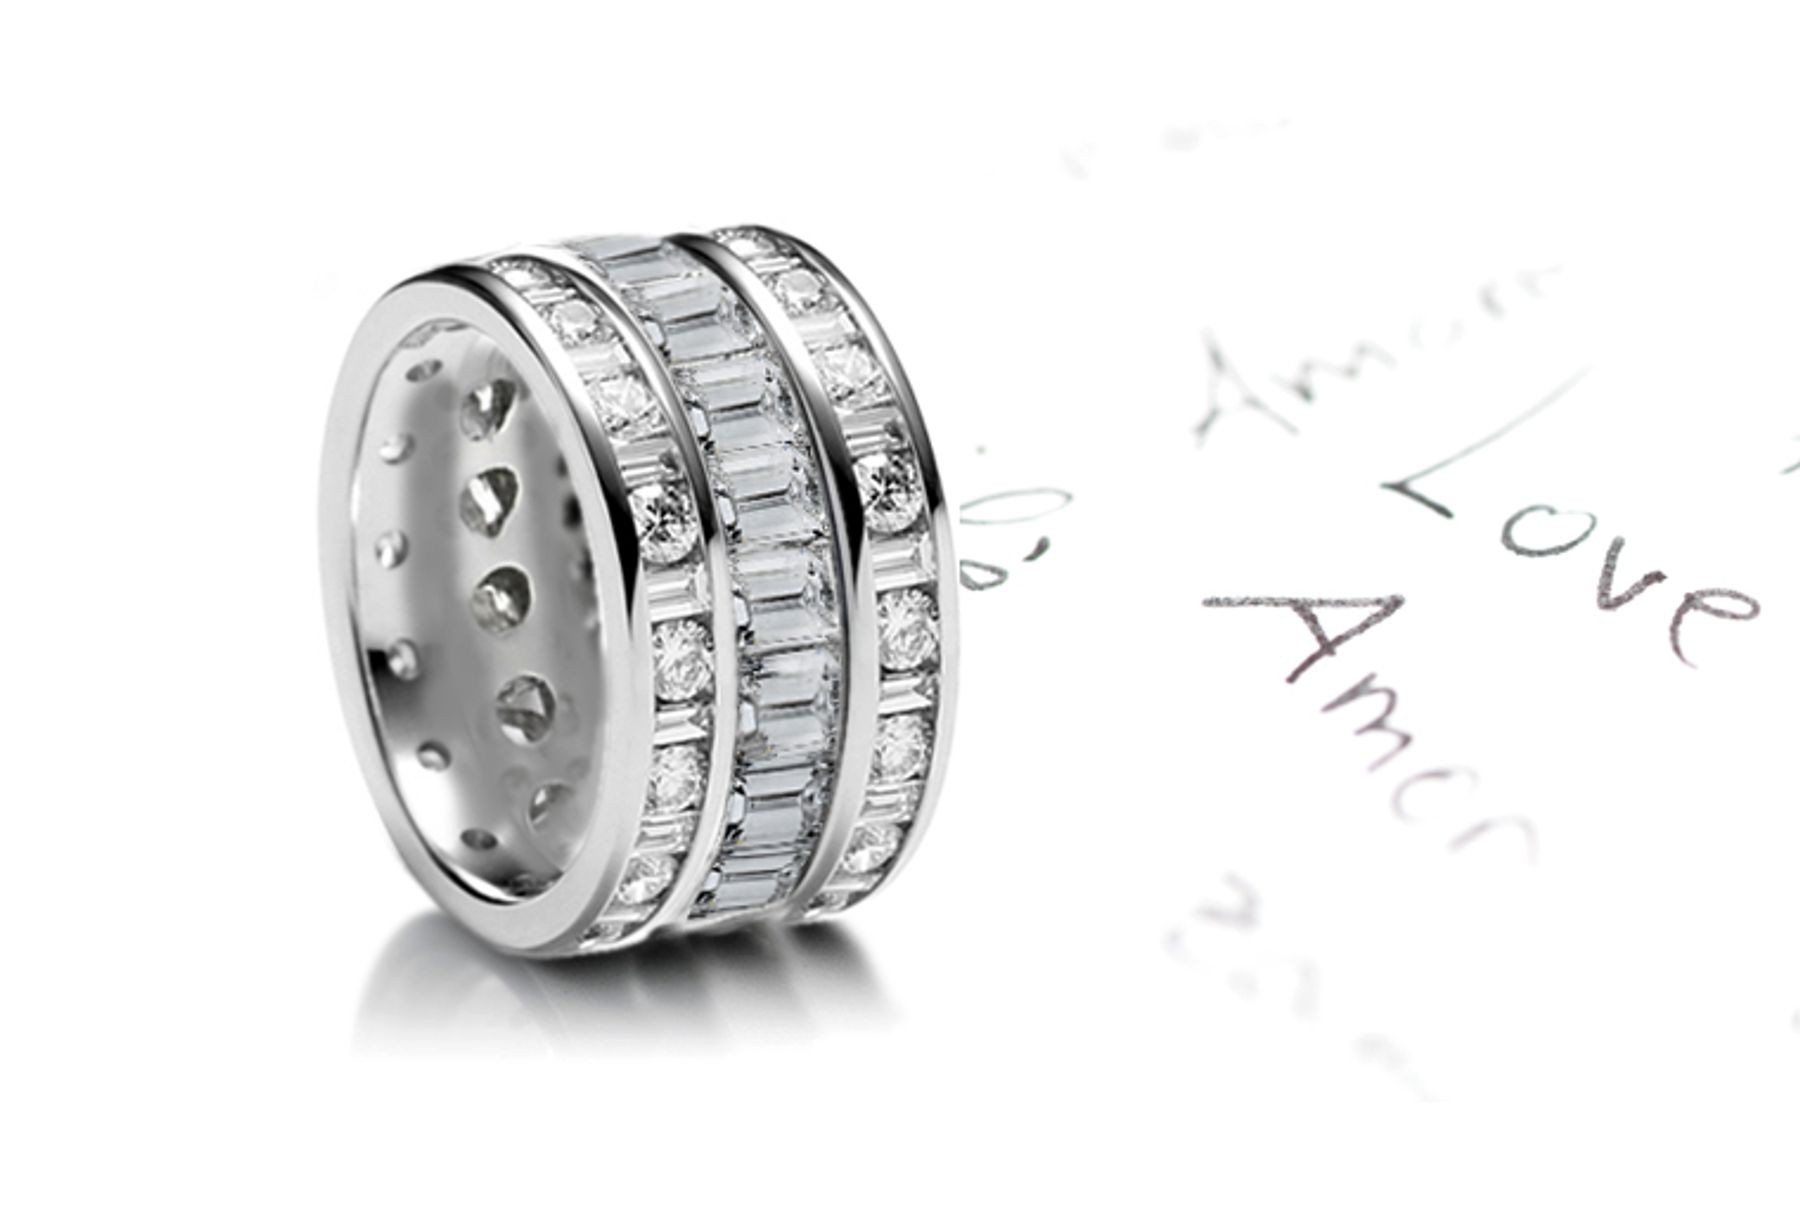 Tailor Designed Sparkler of Baguette Cut Diamonds bordered by row of Asscher Cut Diamonds & Sprinkled Diamond Sides